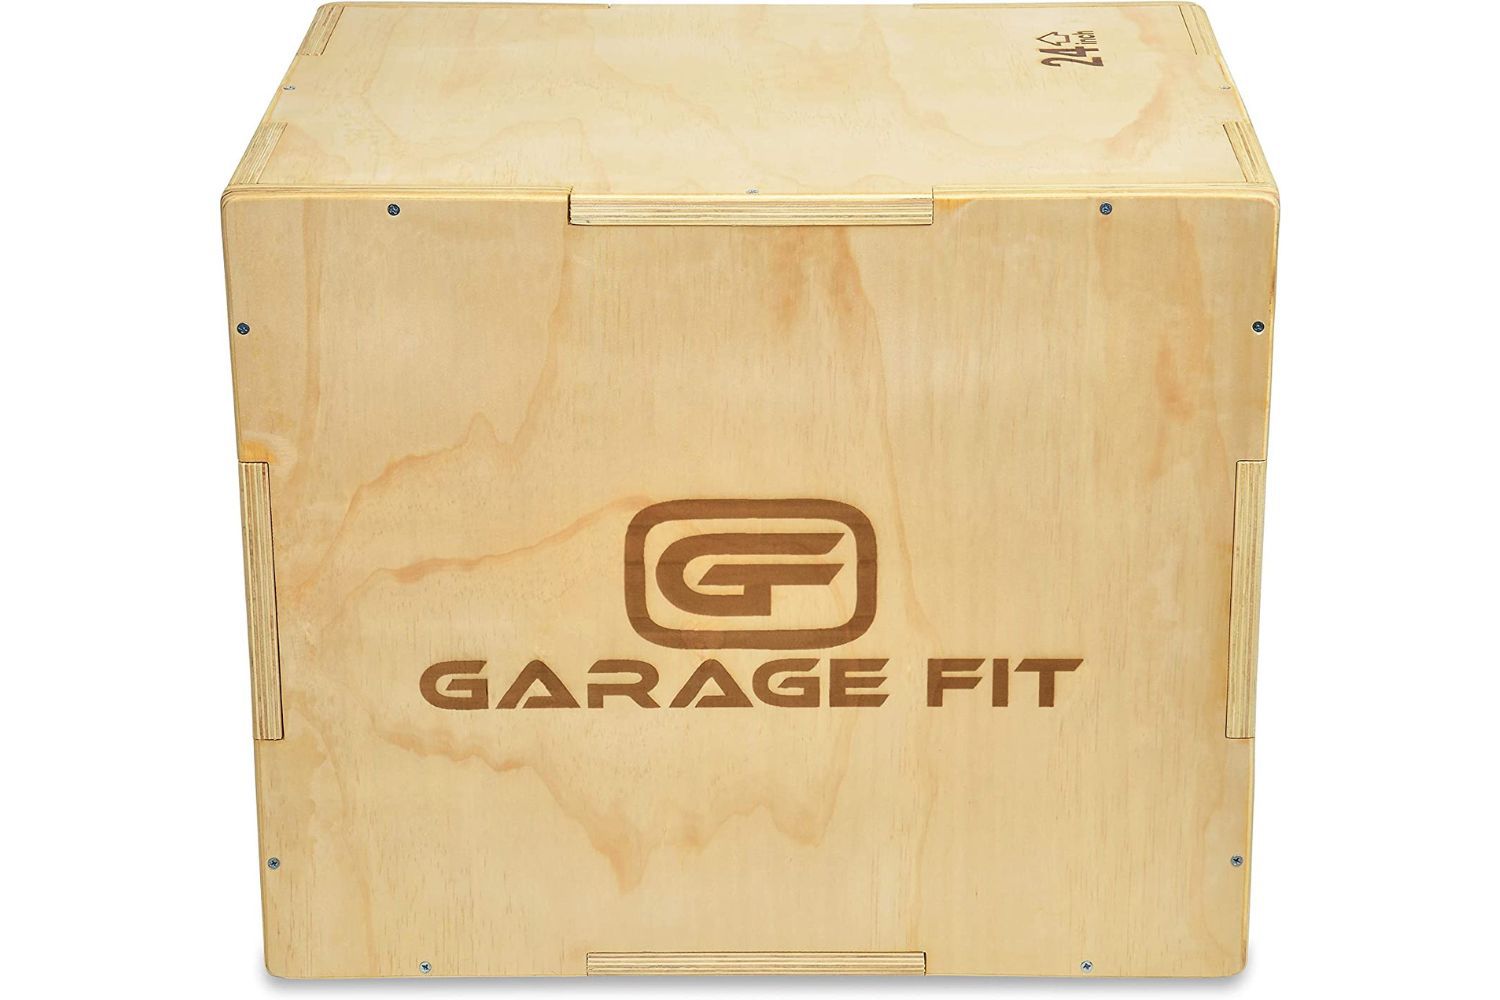 Garage Fit houten kist